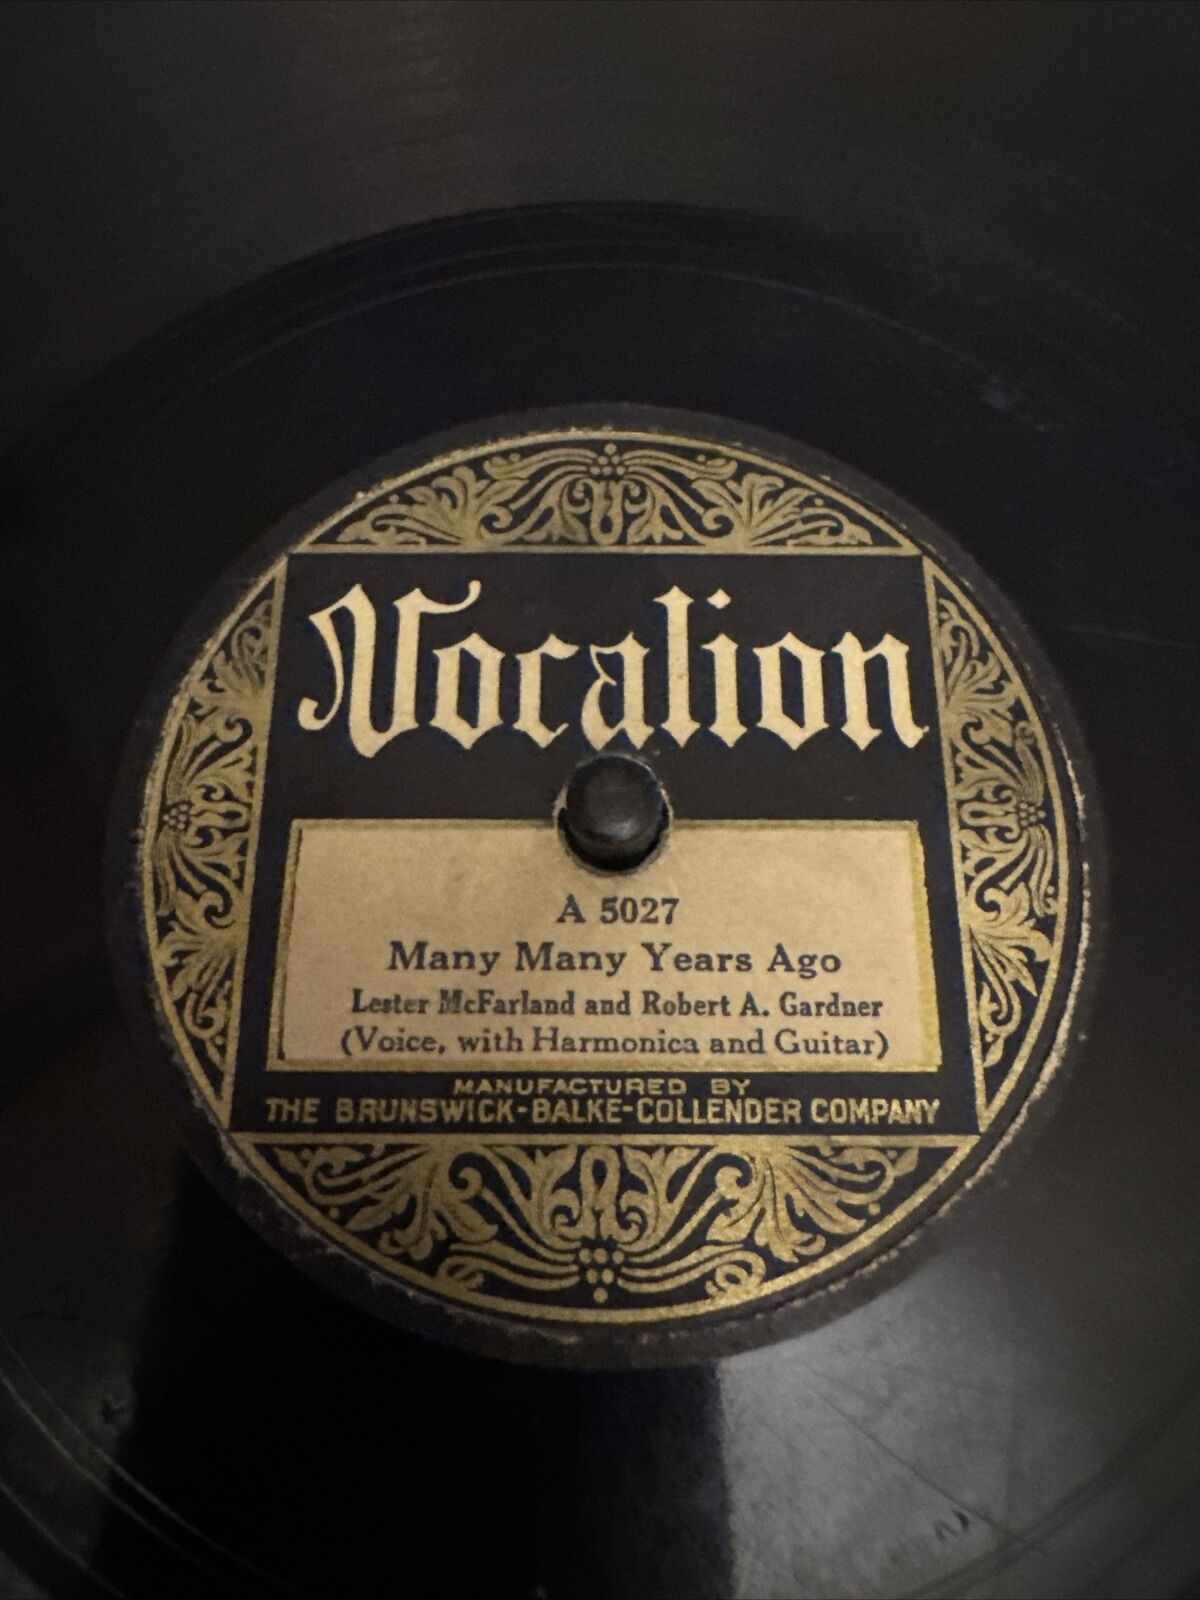 Vocalion 78 RPM Lester McFarland & Robert Gardner - Many Many Years Ago 5027 V